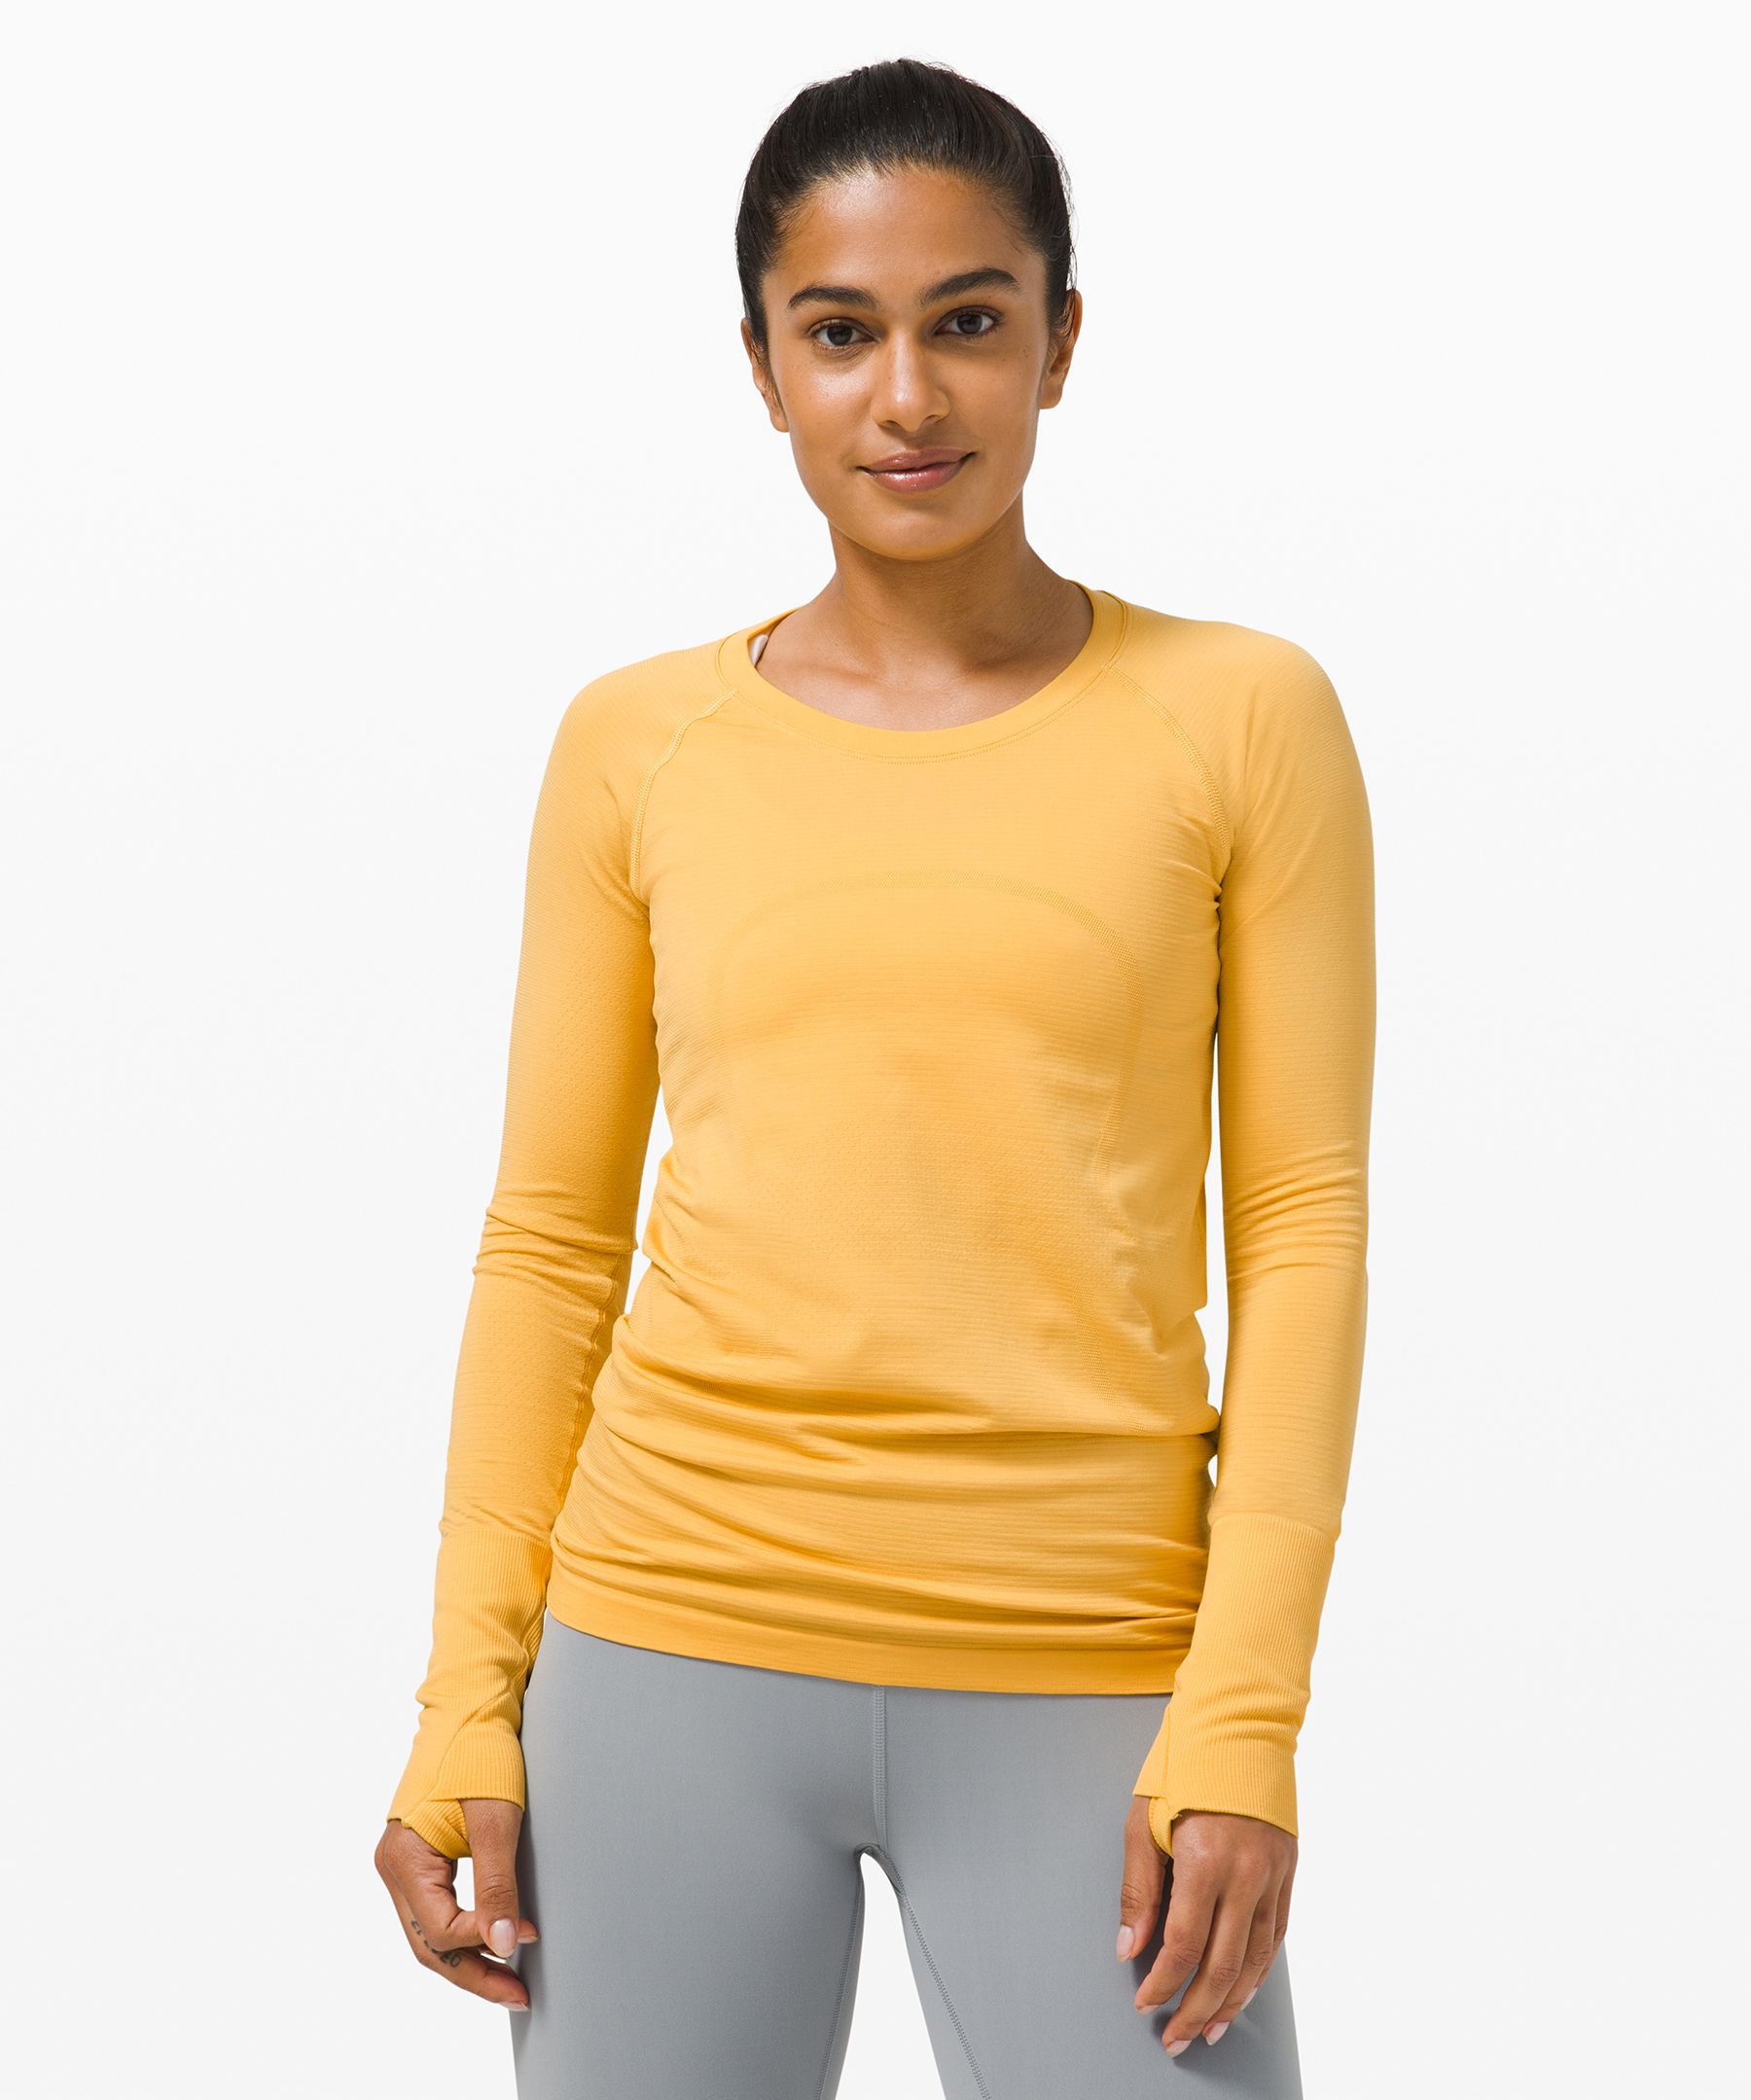 Lululemon Swiftly Tech Long Sleeve Shirt 2.0 In Yellow